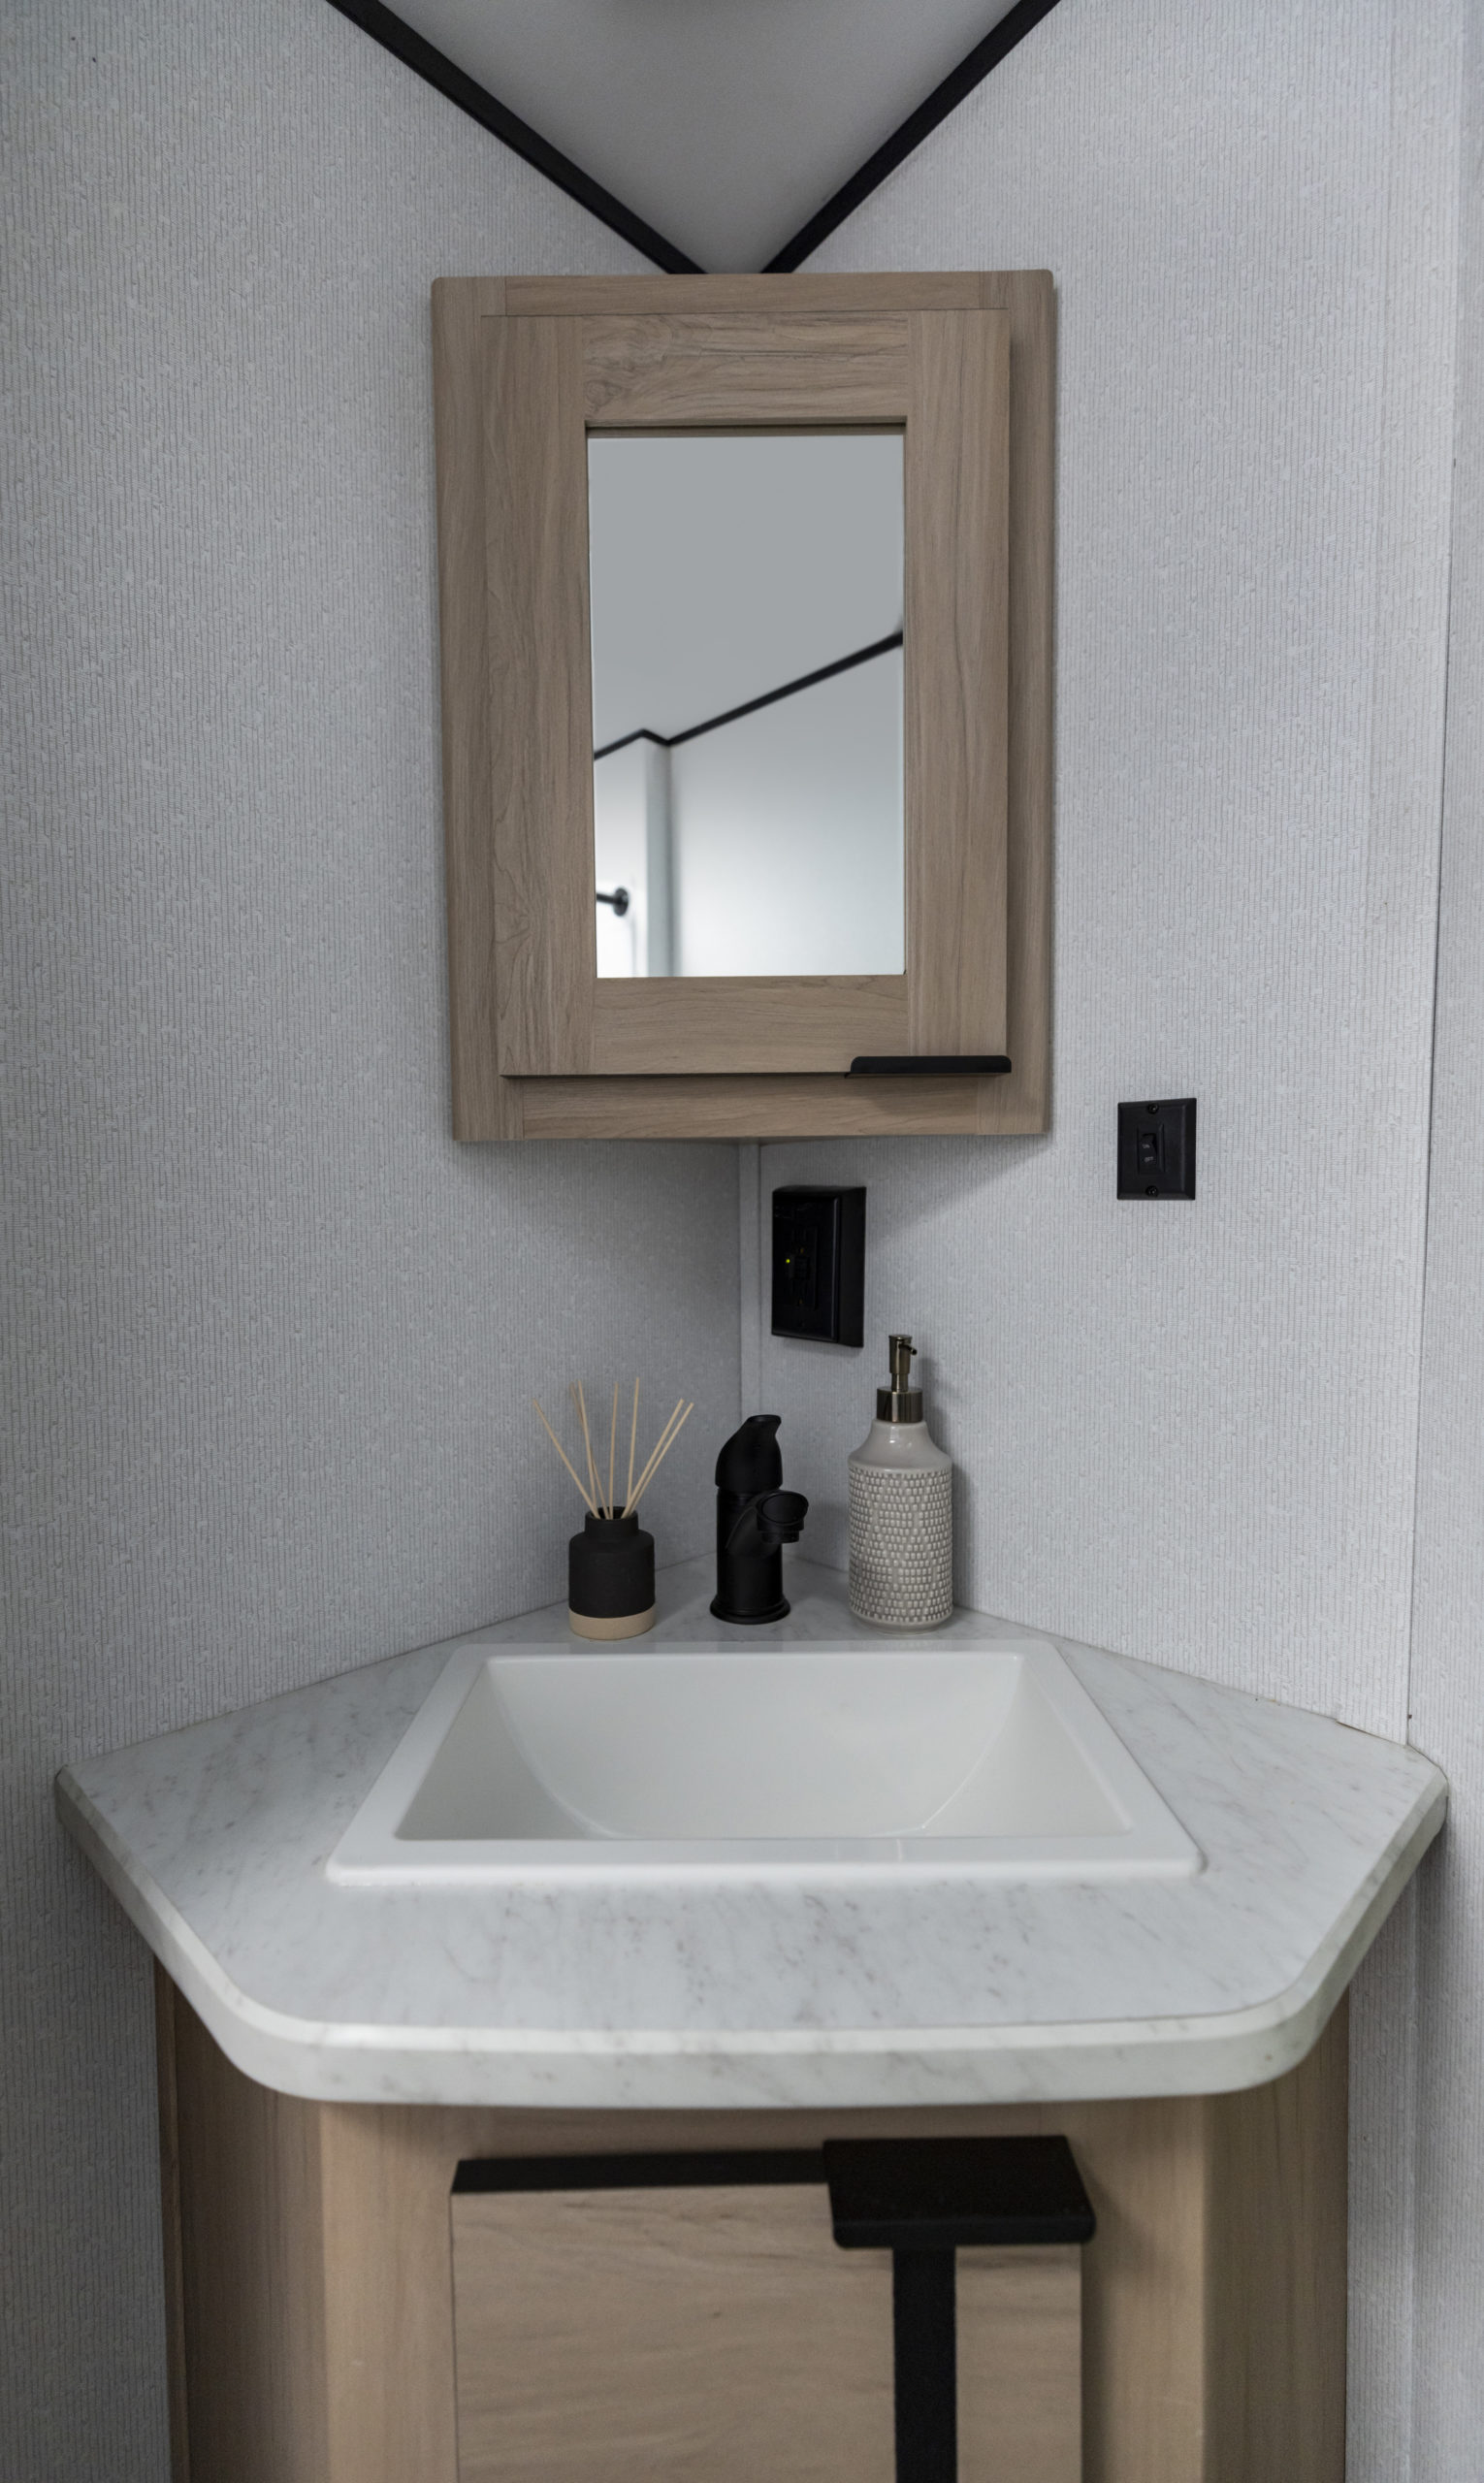 Radiance Interior Bathroom Features Radiance Trailer Edit scaled